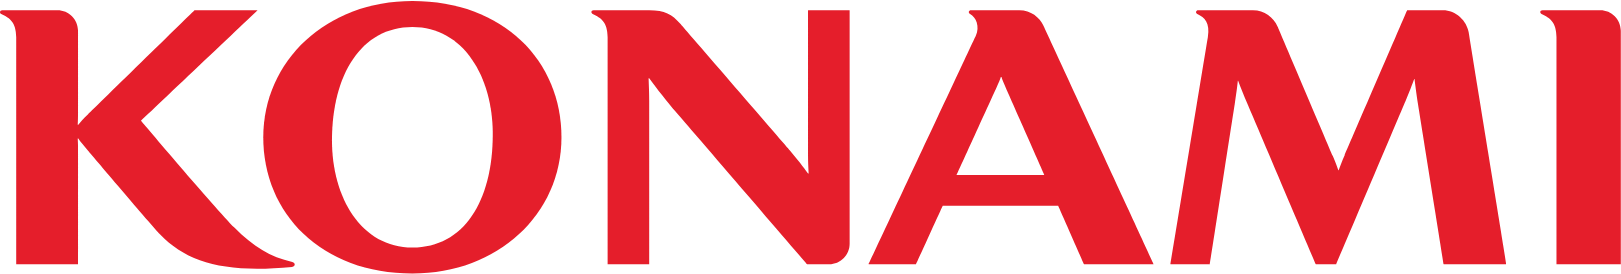 Konami Holdings logo large (transparent PNG)